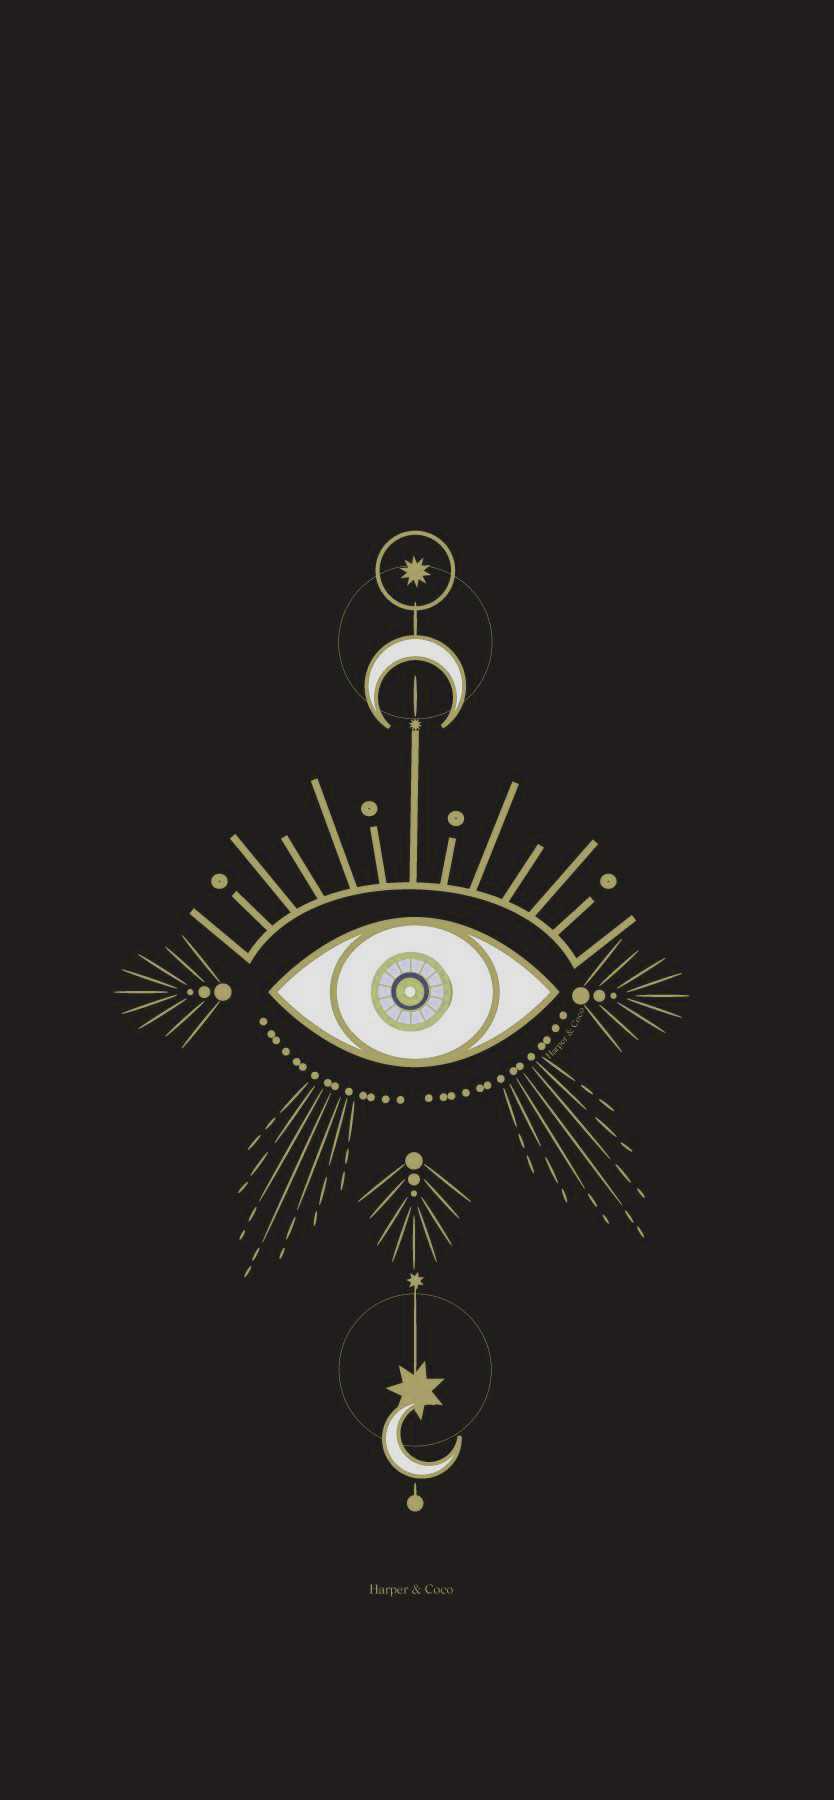 The all seeing eye poster - Spiritual